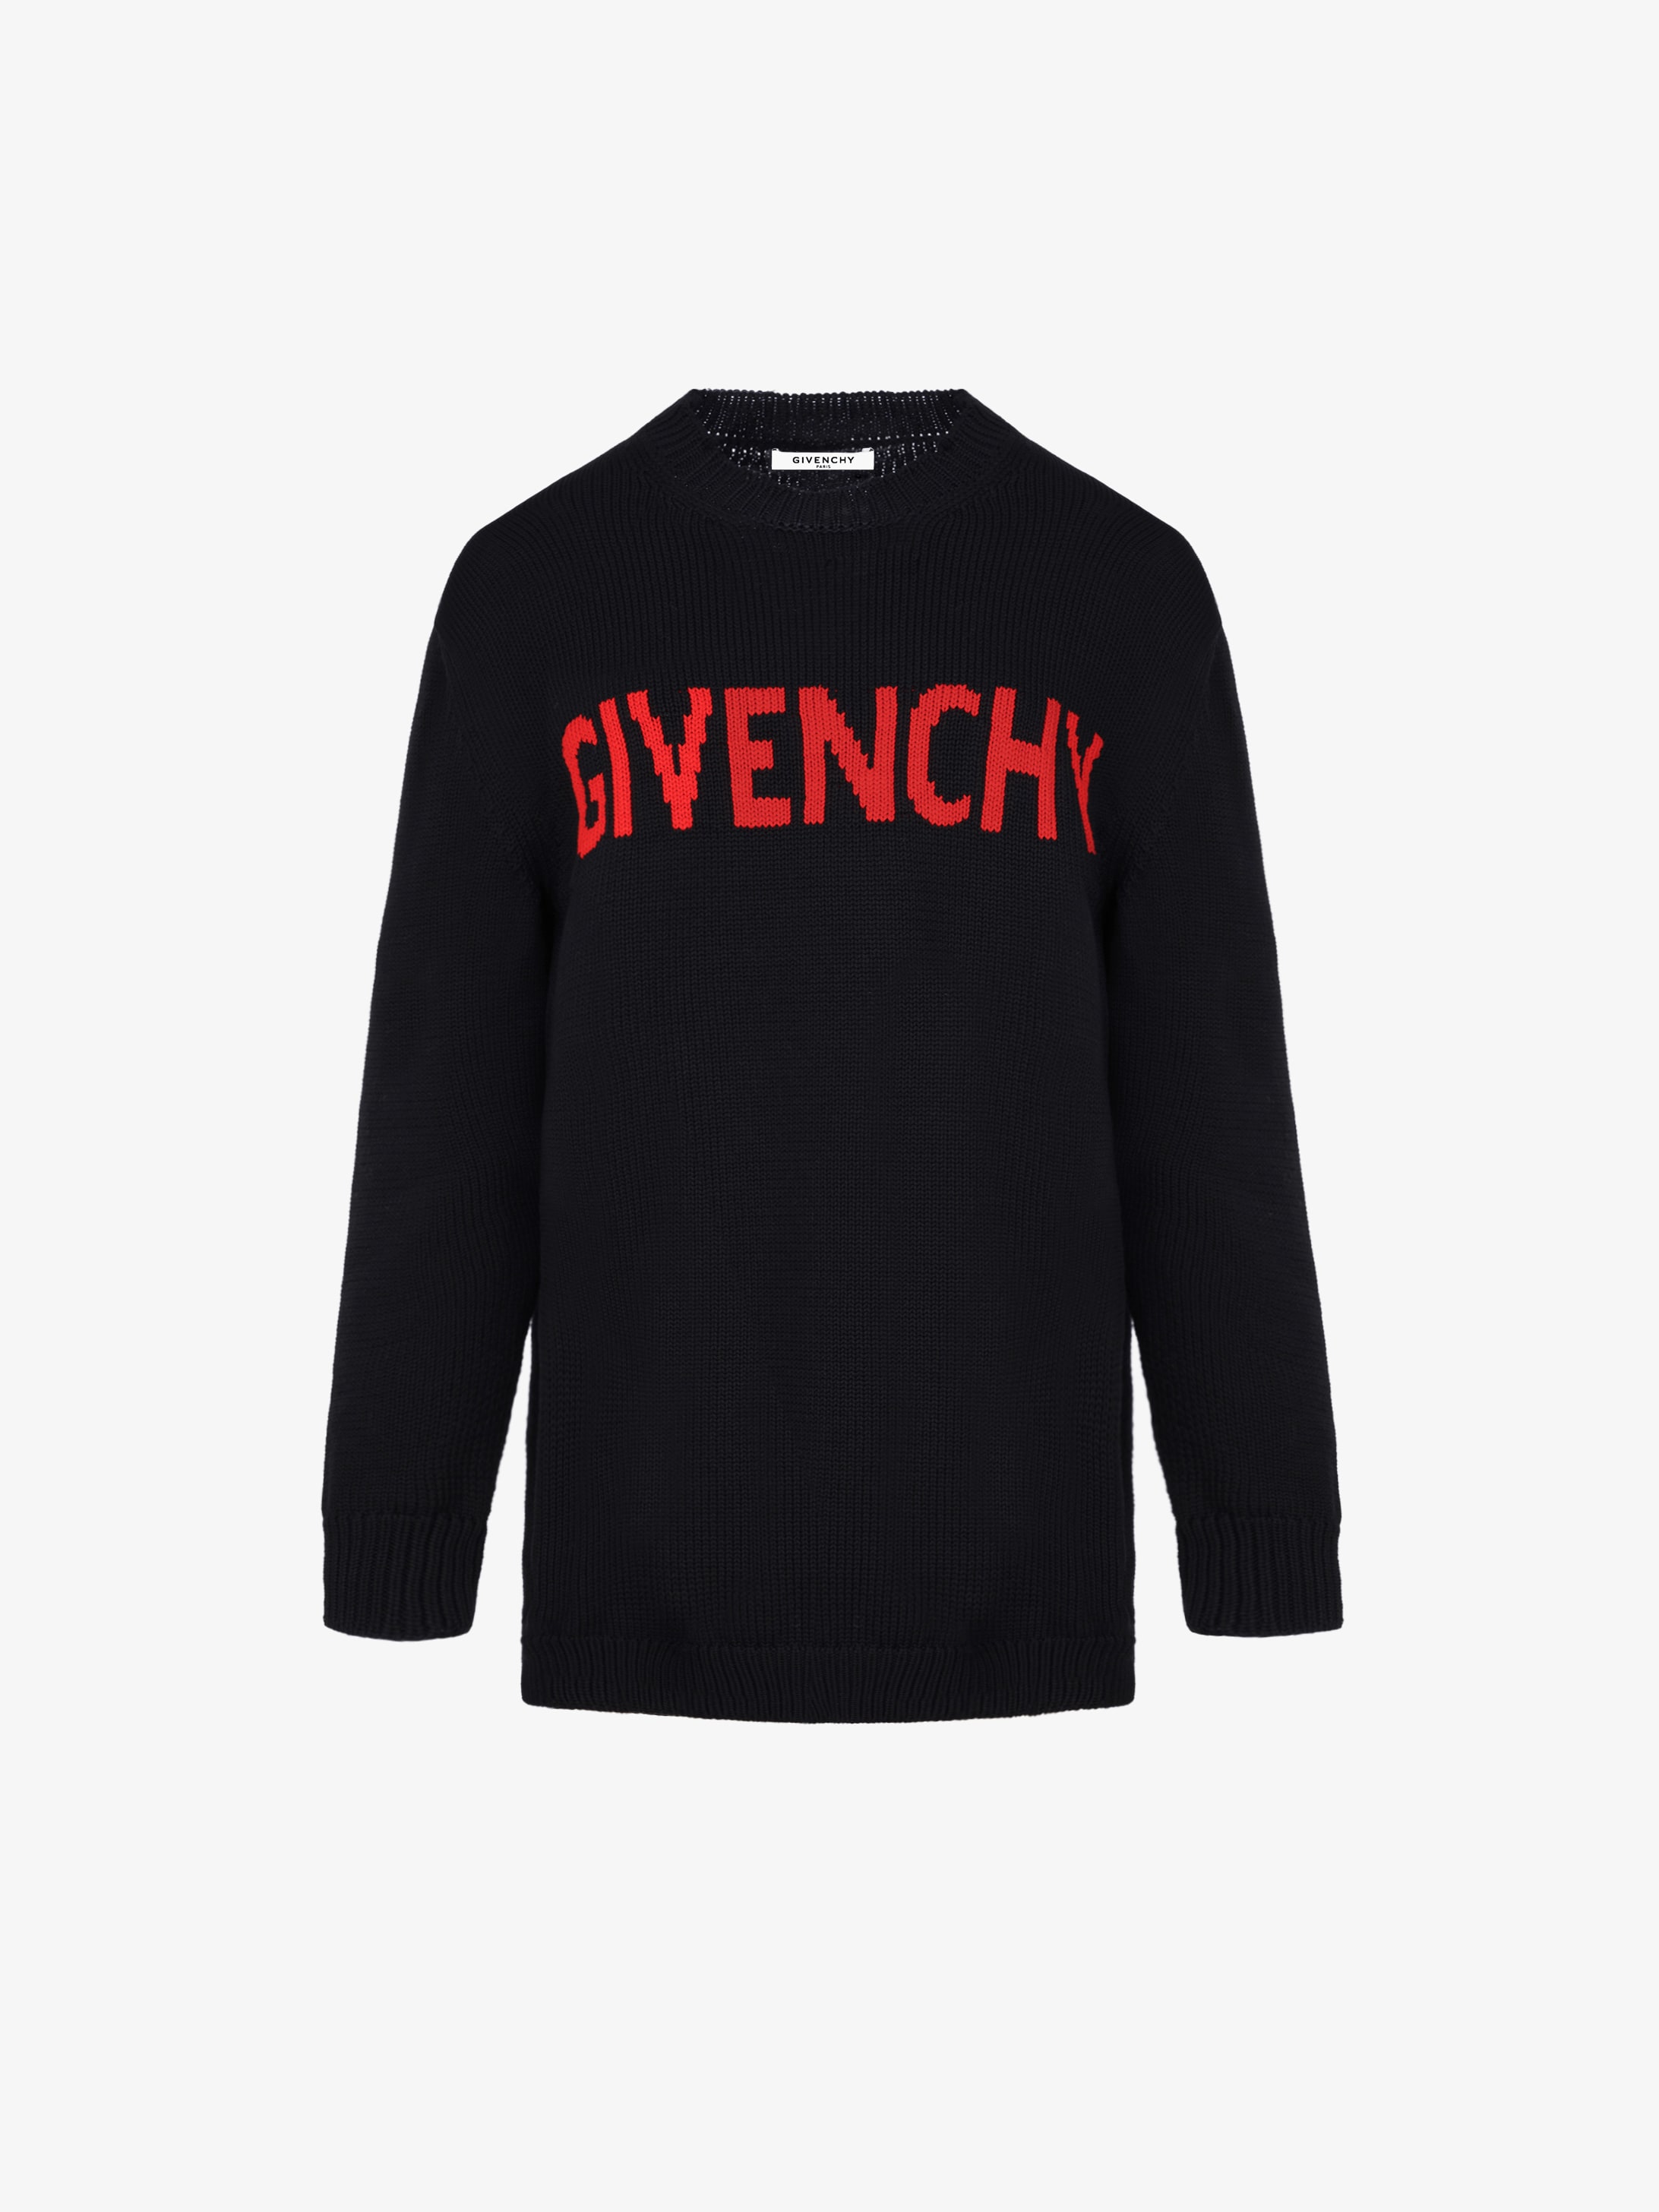 GIVENCHY PARIS sweater in cotton | GIVENCHY Paris